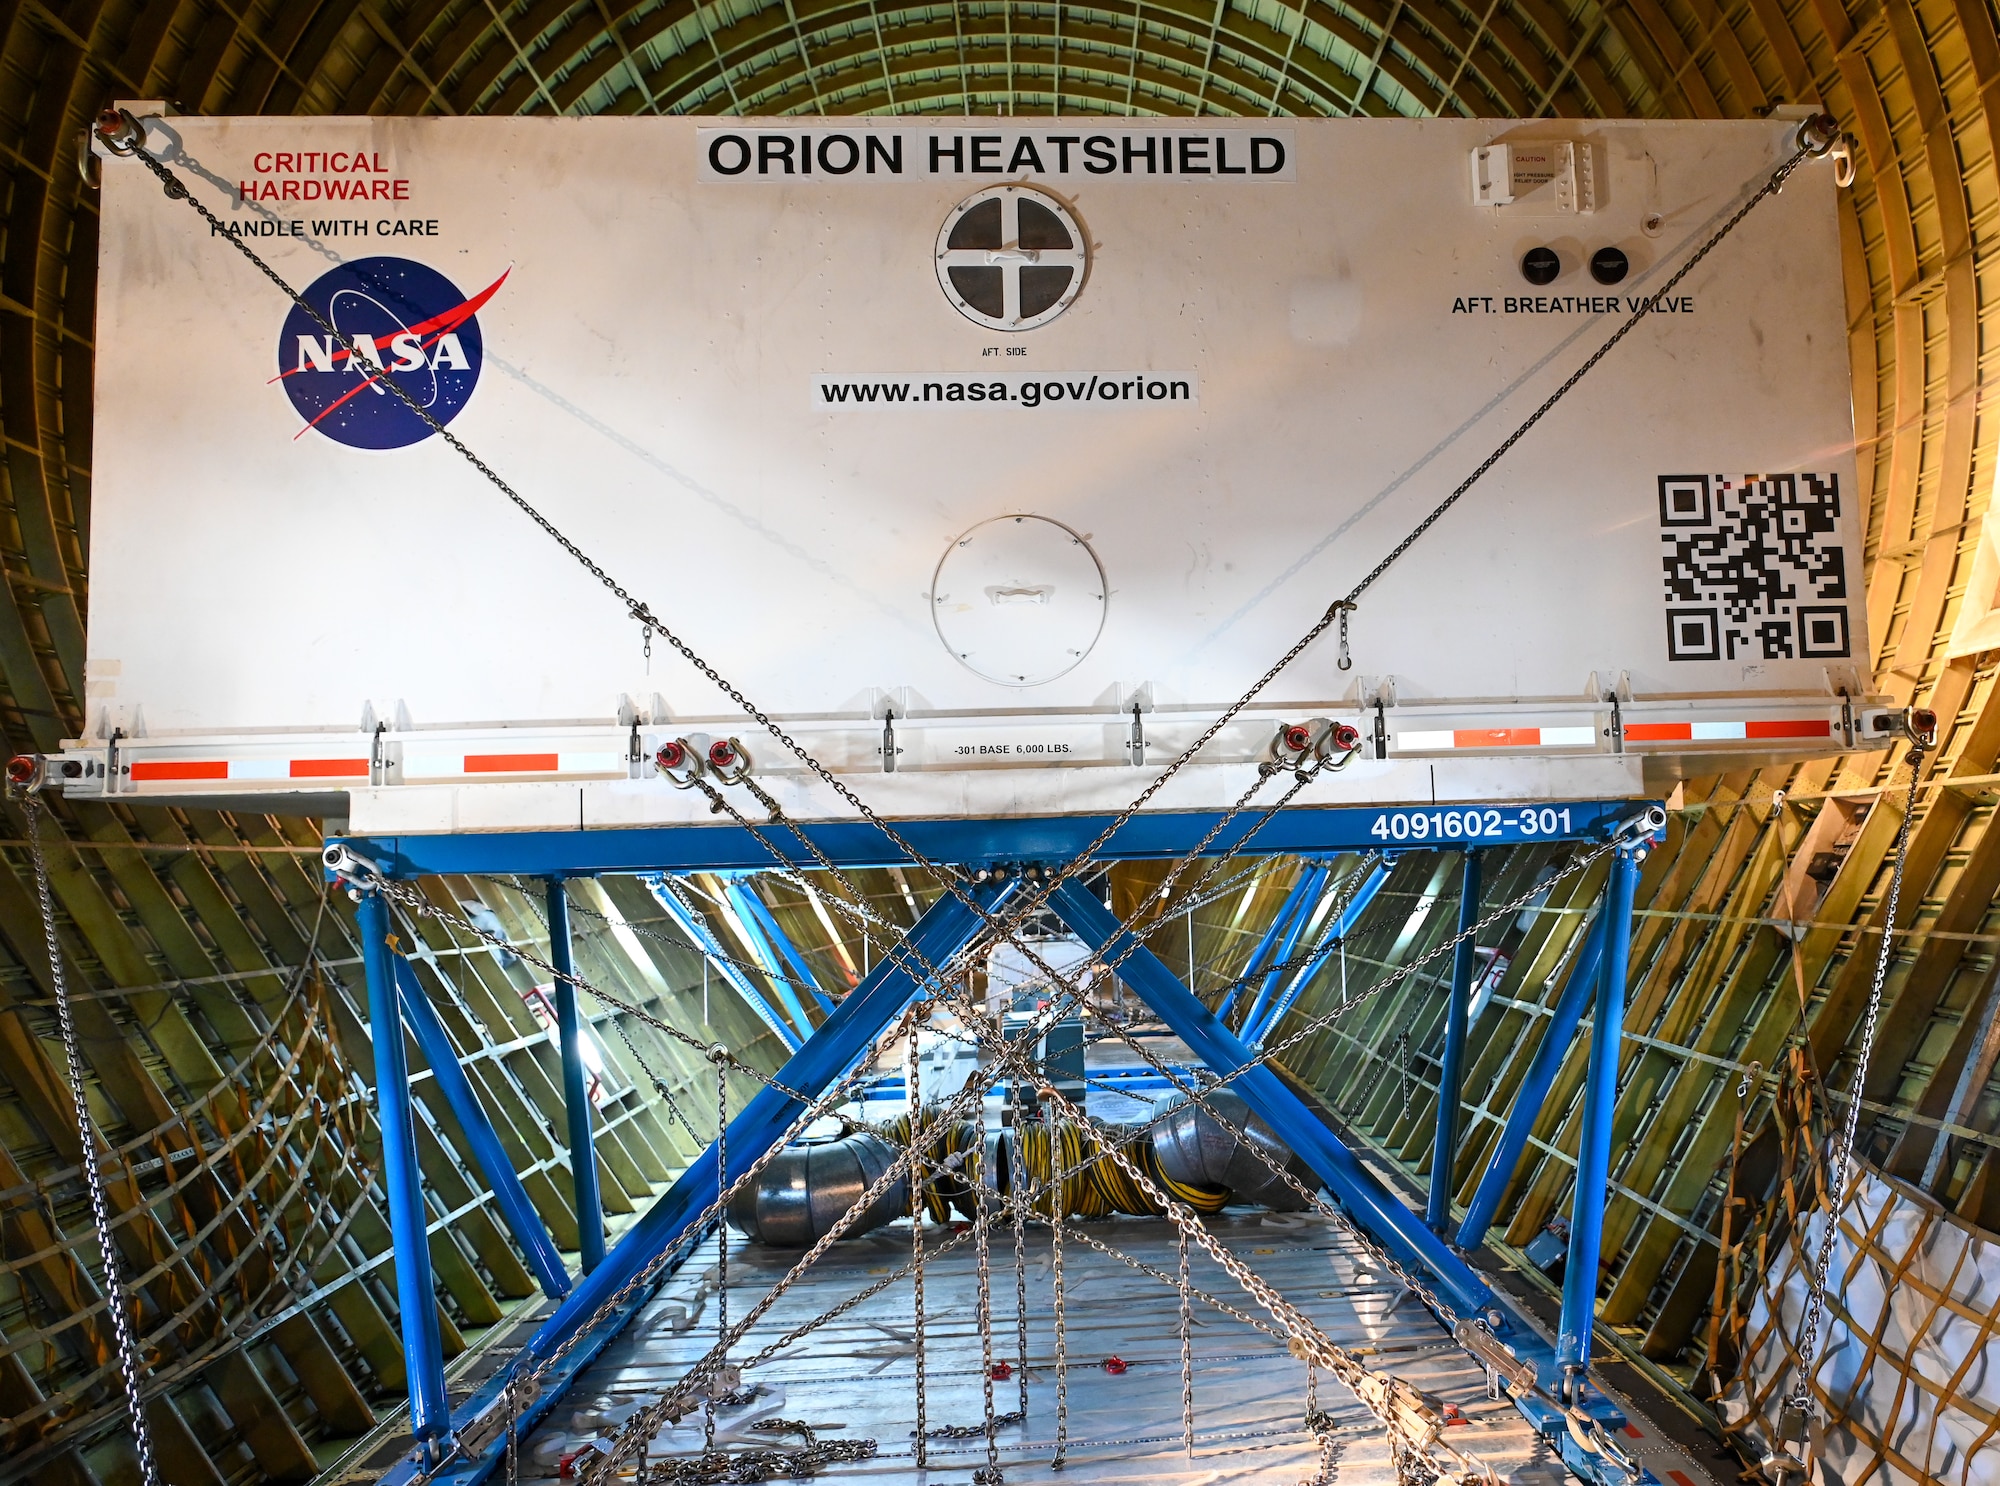 Orion heatshield cargo container inside aircraft